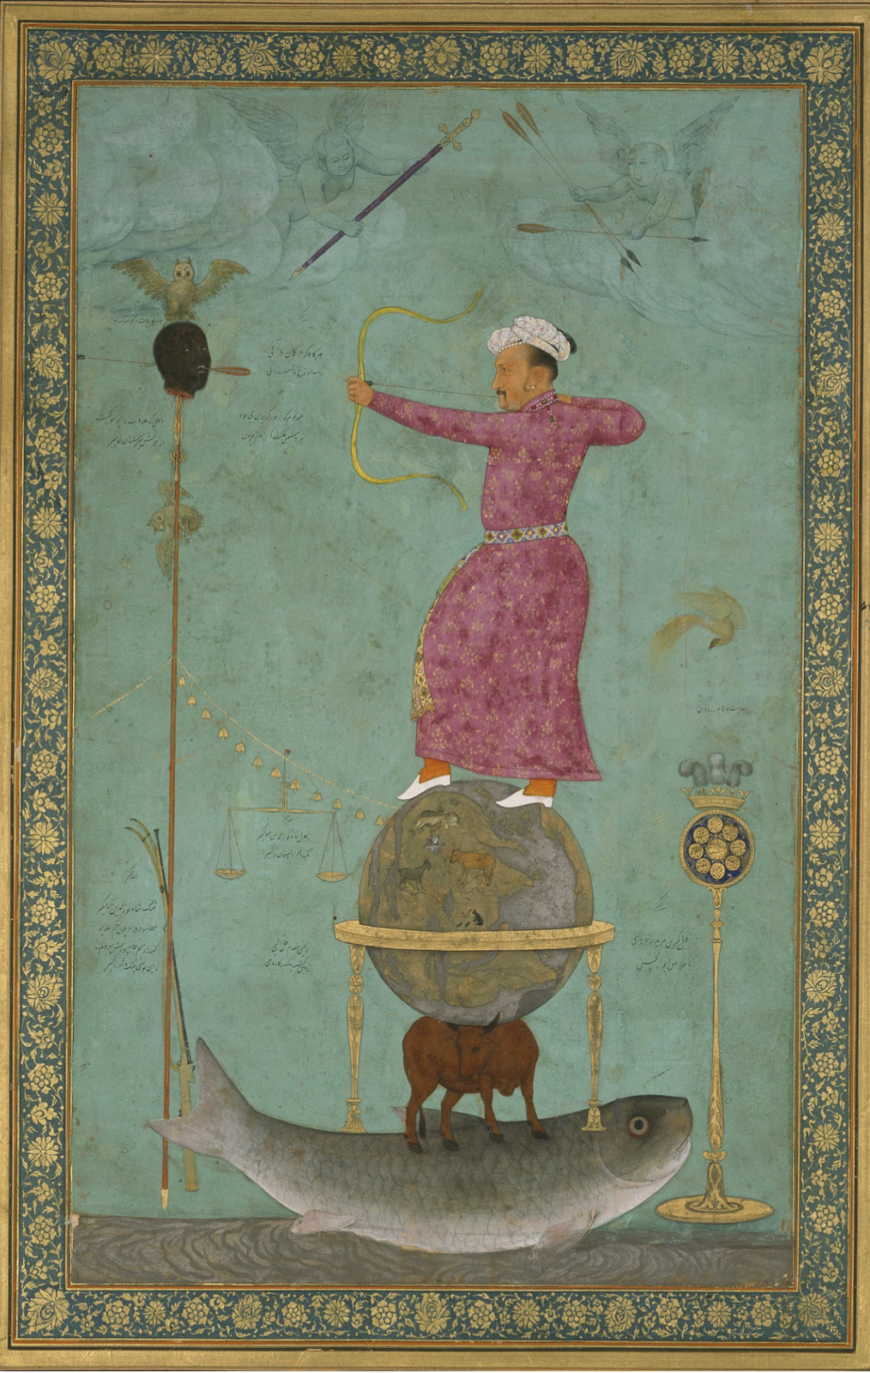 Abuʾl Hasan, Jahangir Shoots Malik Ambar, c. 1620, gouache on paper, 25.8 x 16.5 cm (Chester Beatty Library, Dublin)